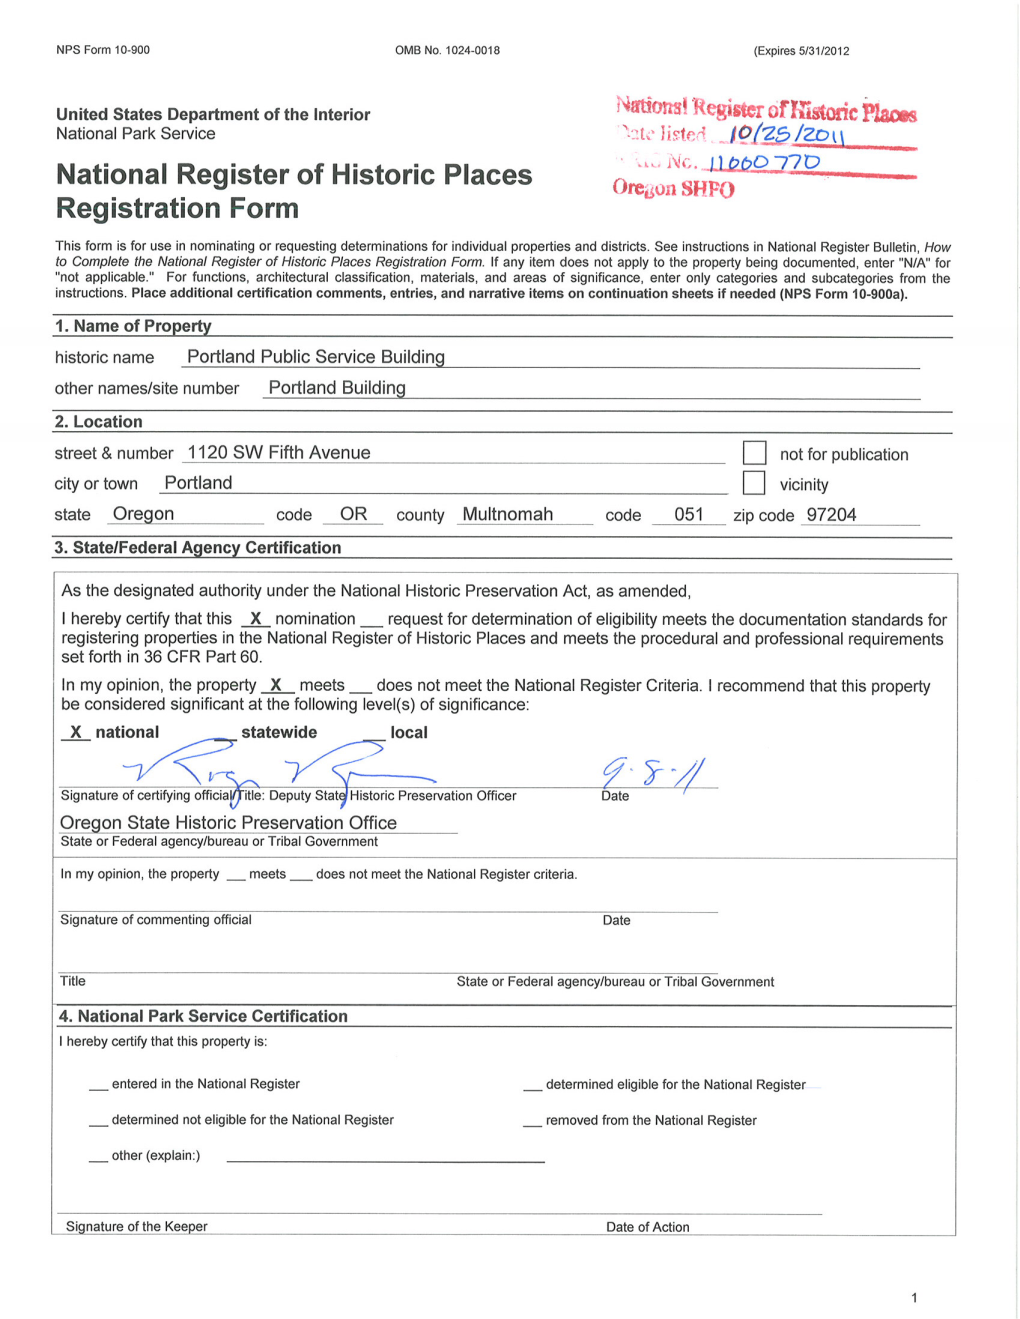 NPS National Register Listing